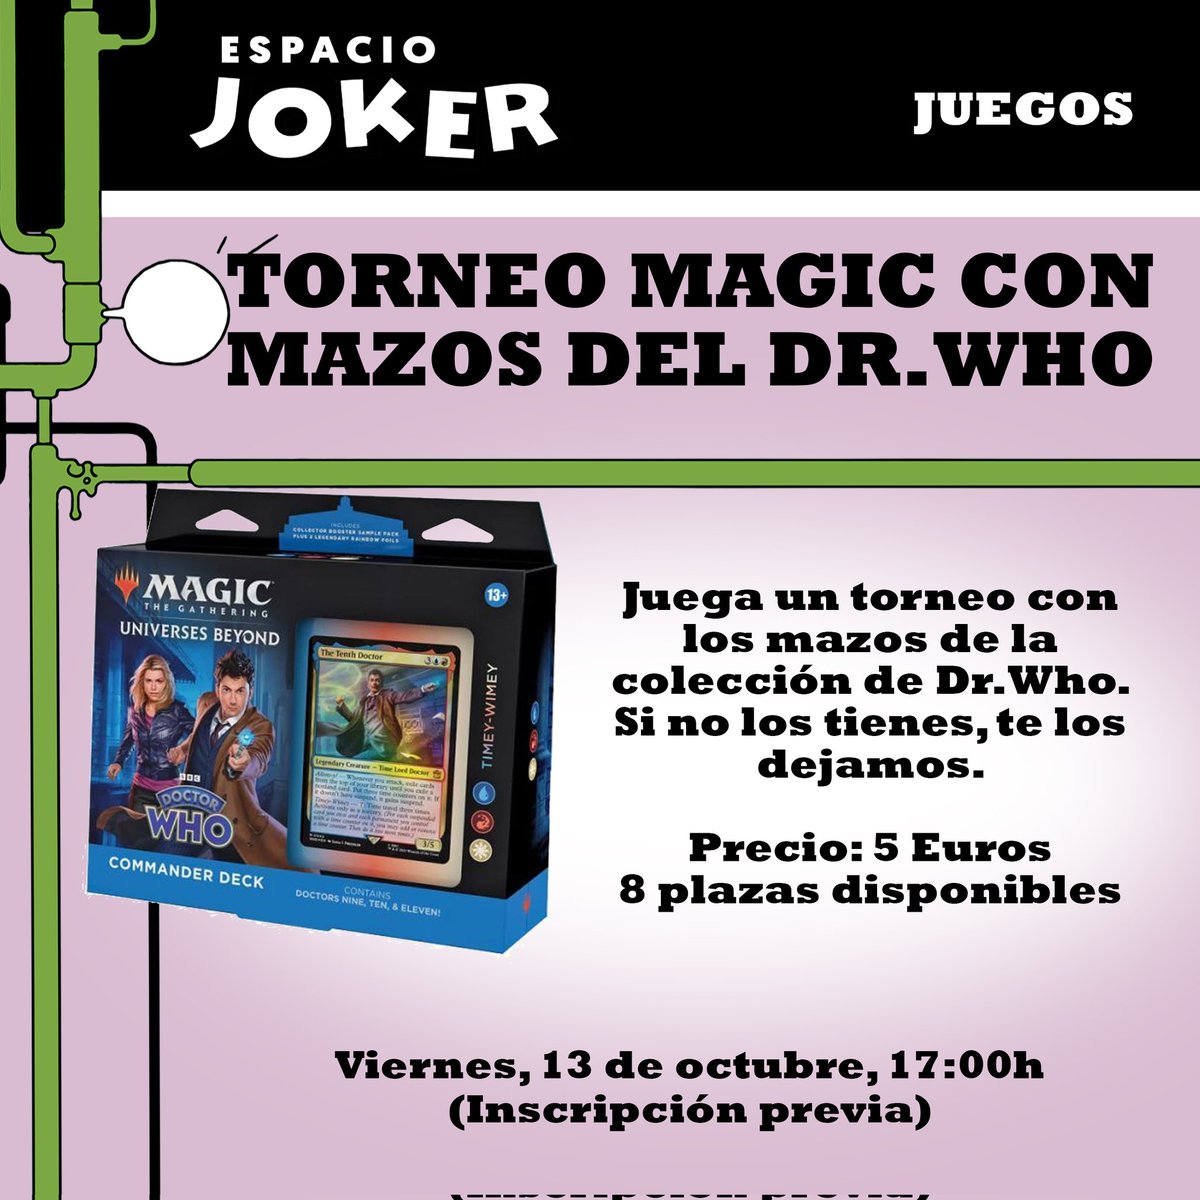 Esta tarde de viernes vamos a jugar a Magic en espacio Joker. ¿Te animas a participar?
¡Plazas disponibles!
#comic #libreriaJoker #eventosJoker #espacioJoker #torneomagic #bilbao